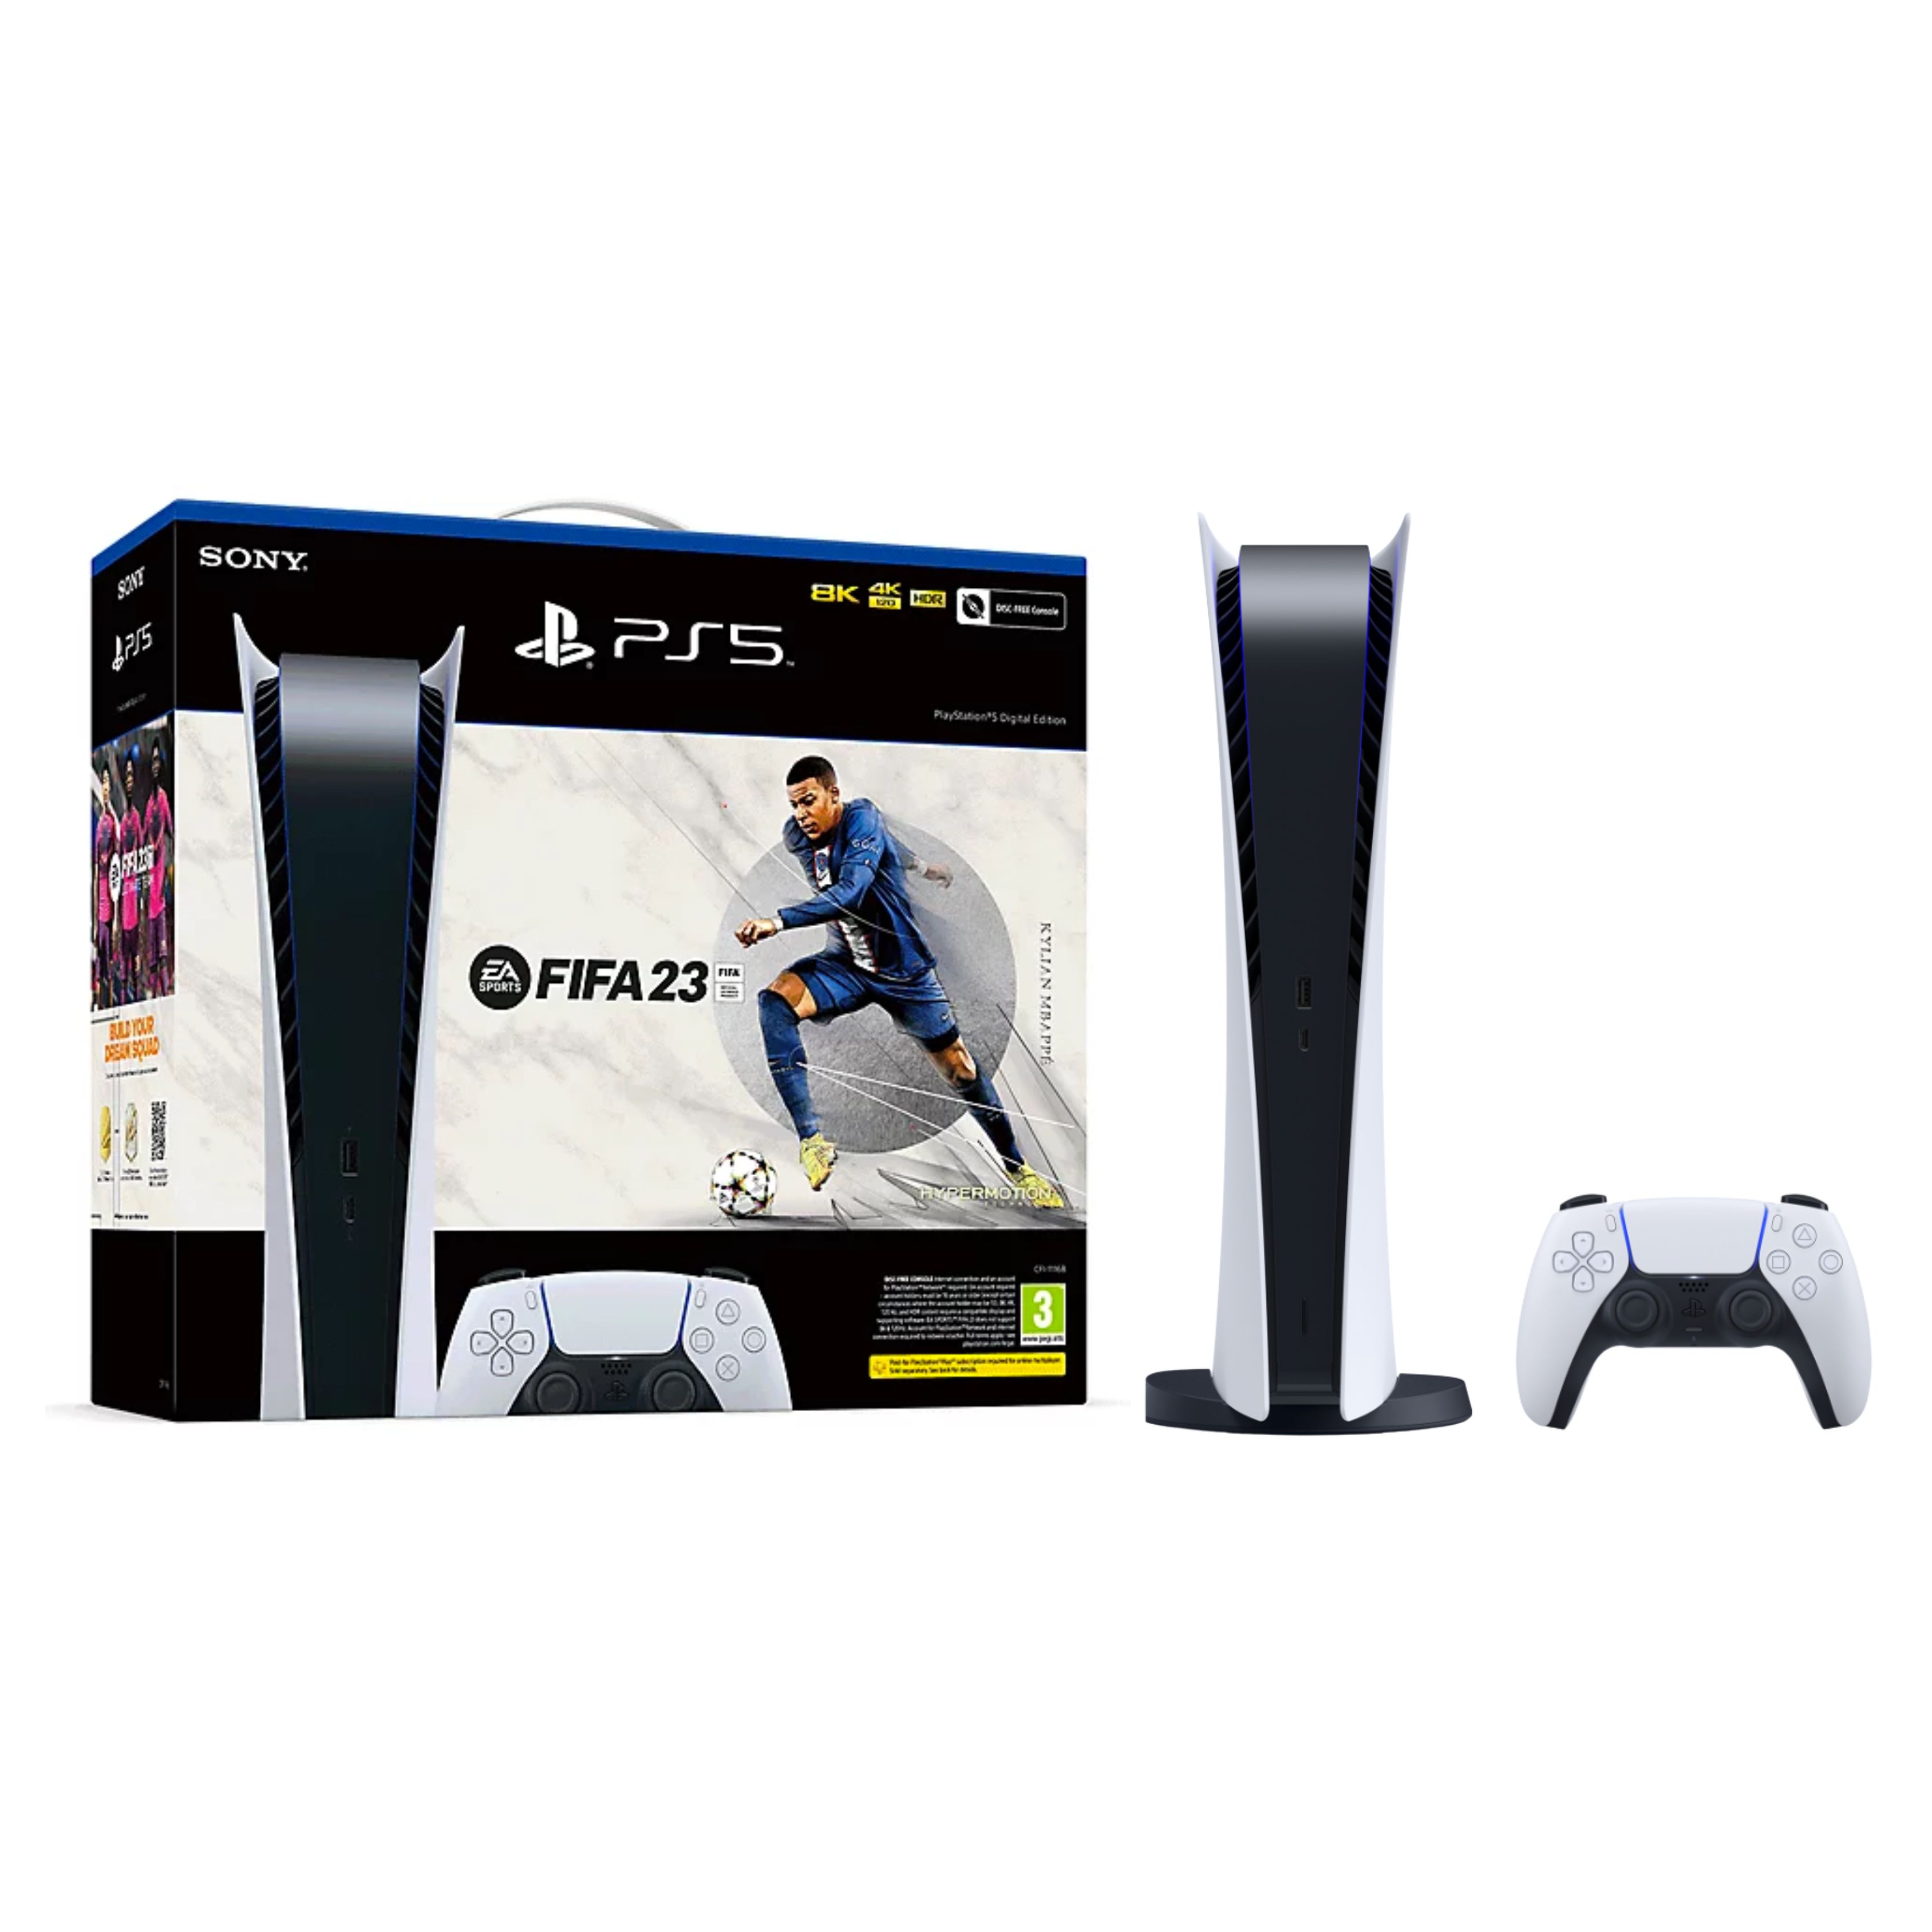 Sony anuncia bundle do PlayStation 5 com FIFA 23